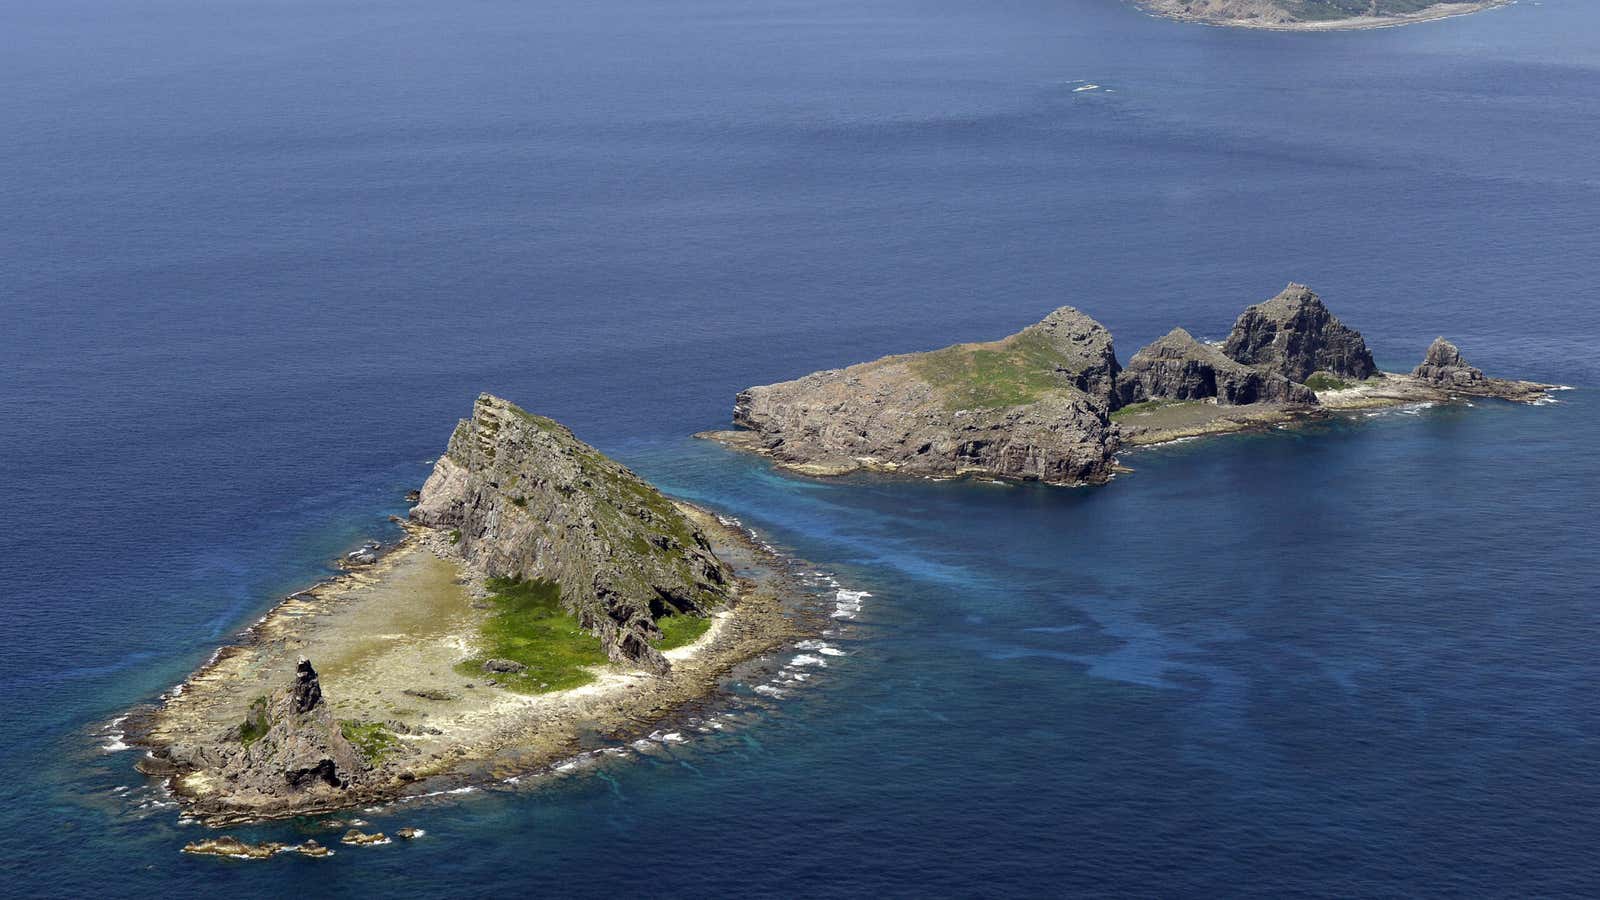 No cloud service is an island (unlike the Senkaku/Diaoyu archipelago).